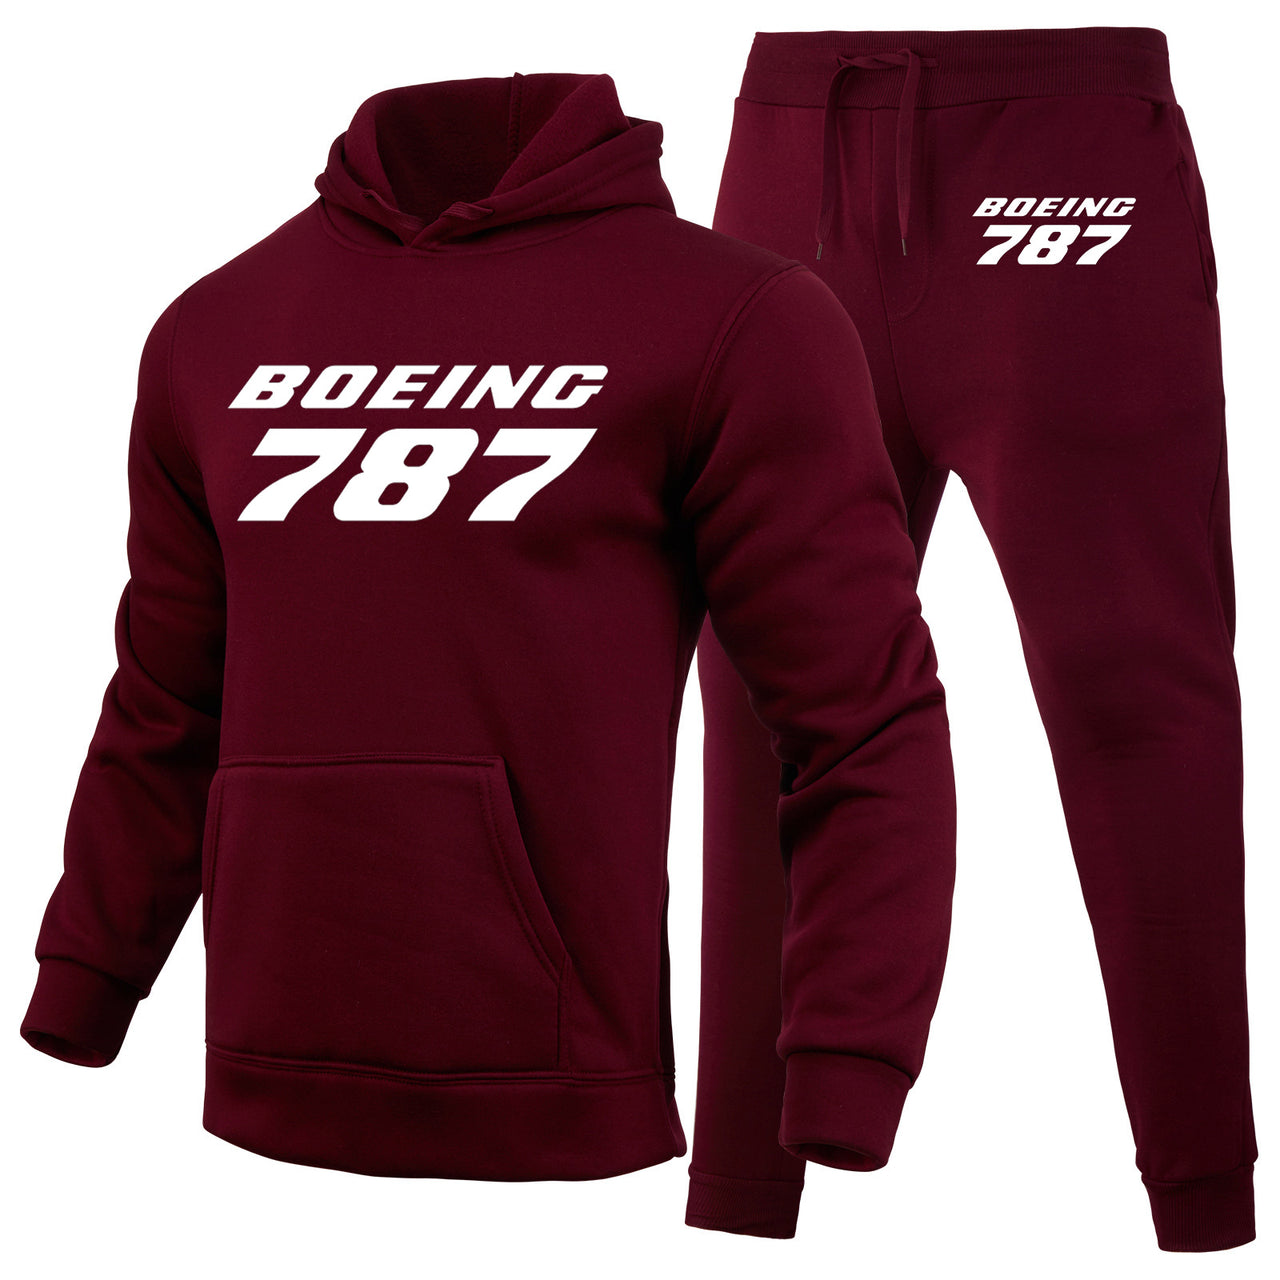 Boeing 787 & Text Designed Hoodies & Sweatpants Set